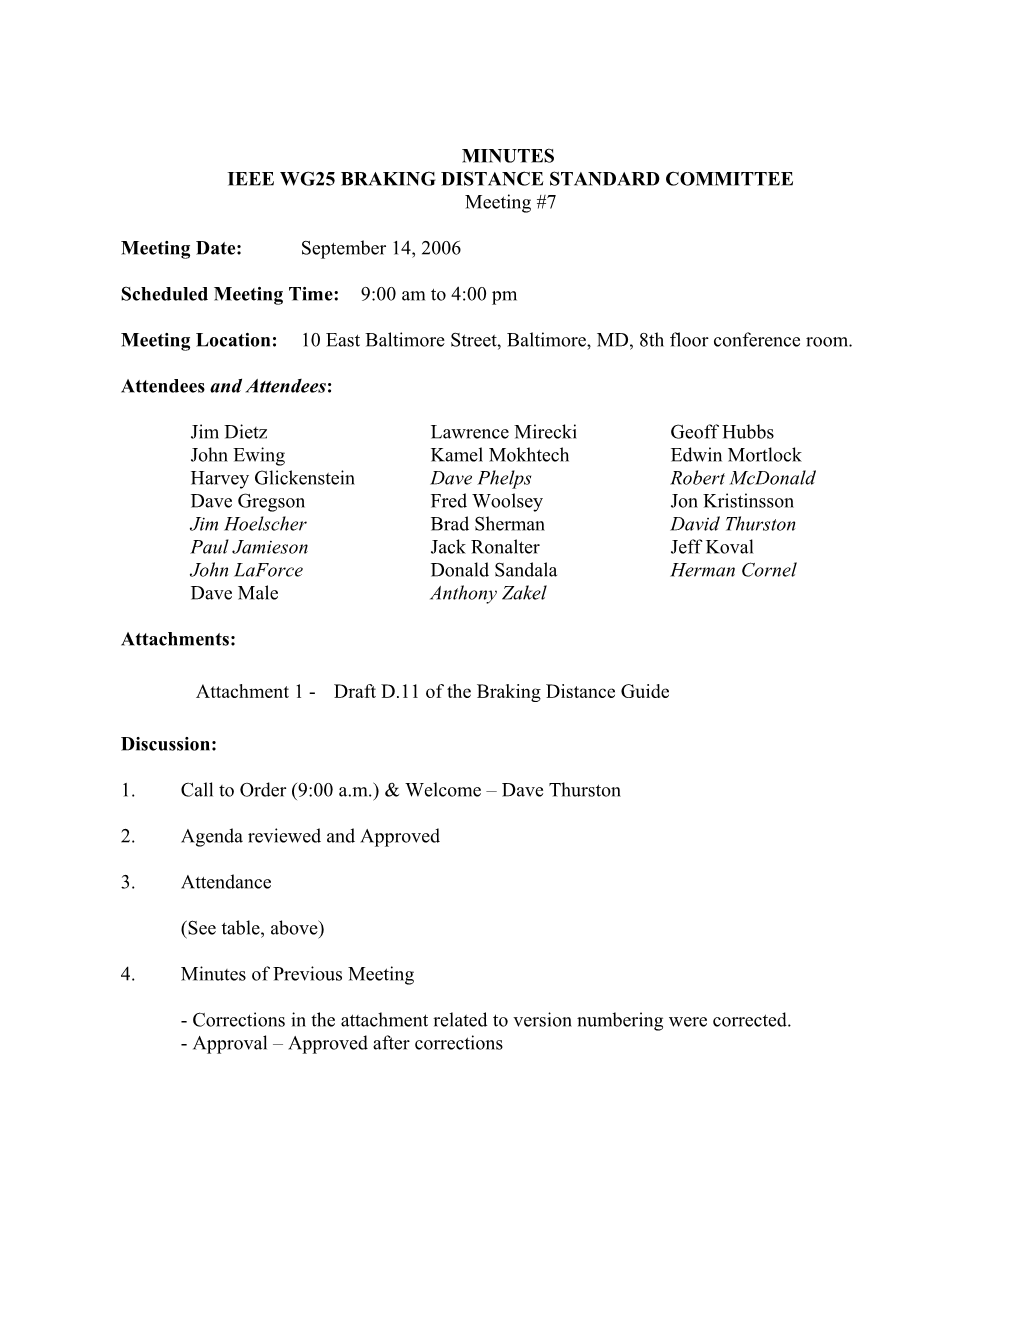 Minutes of Committee Meeting